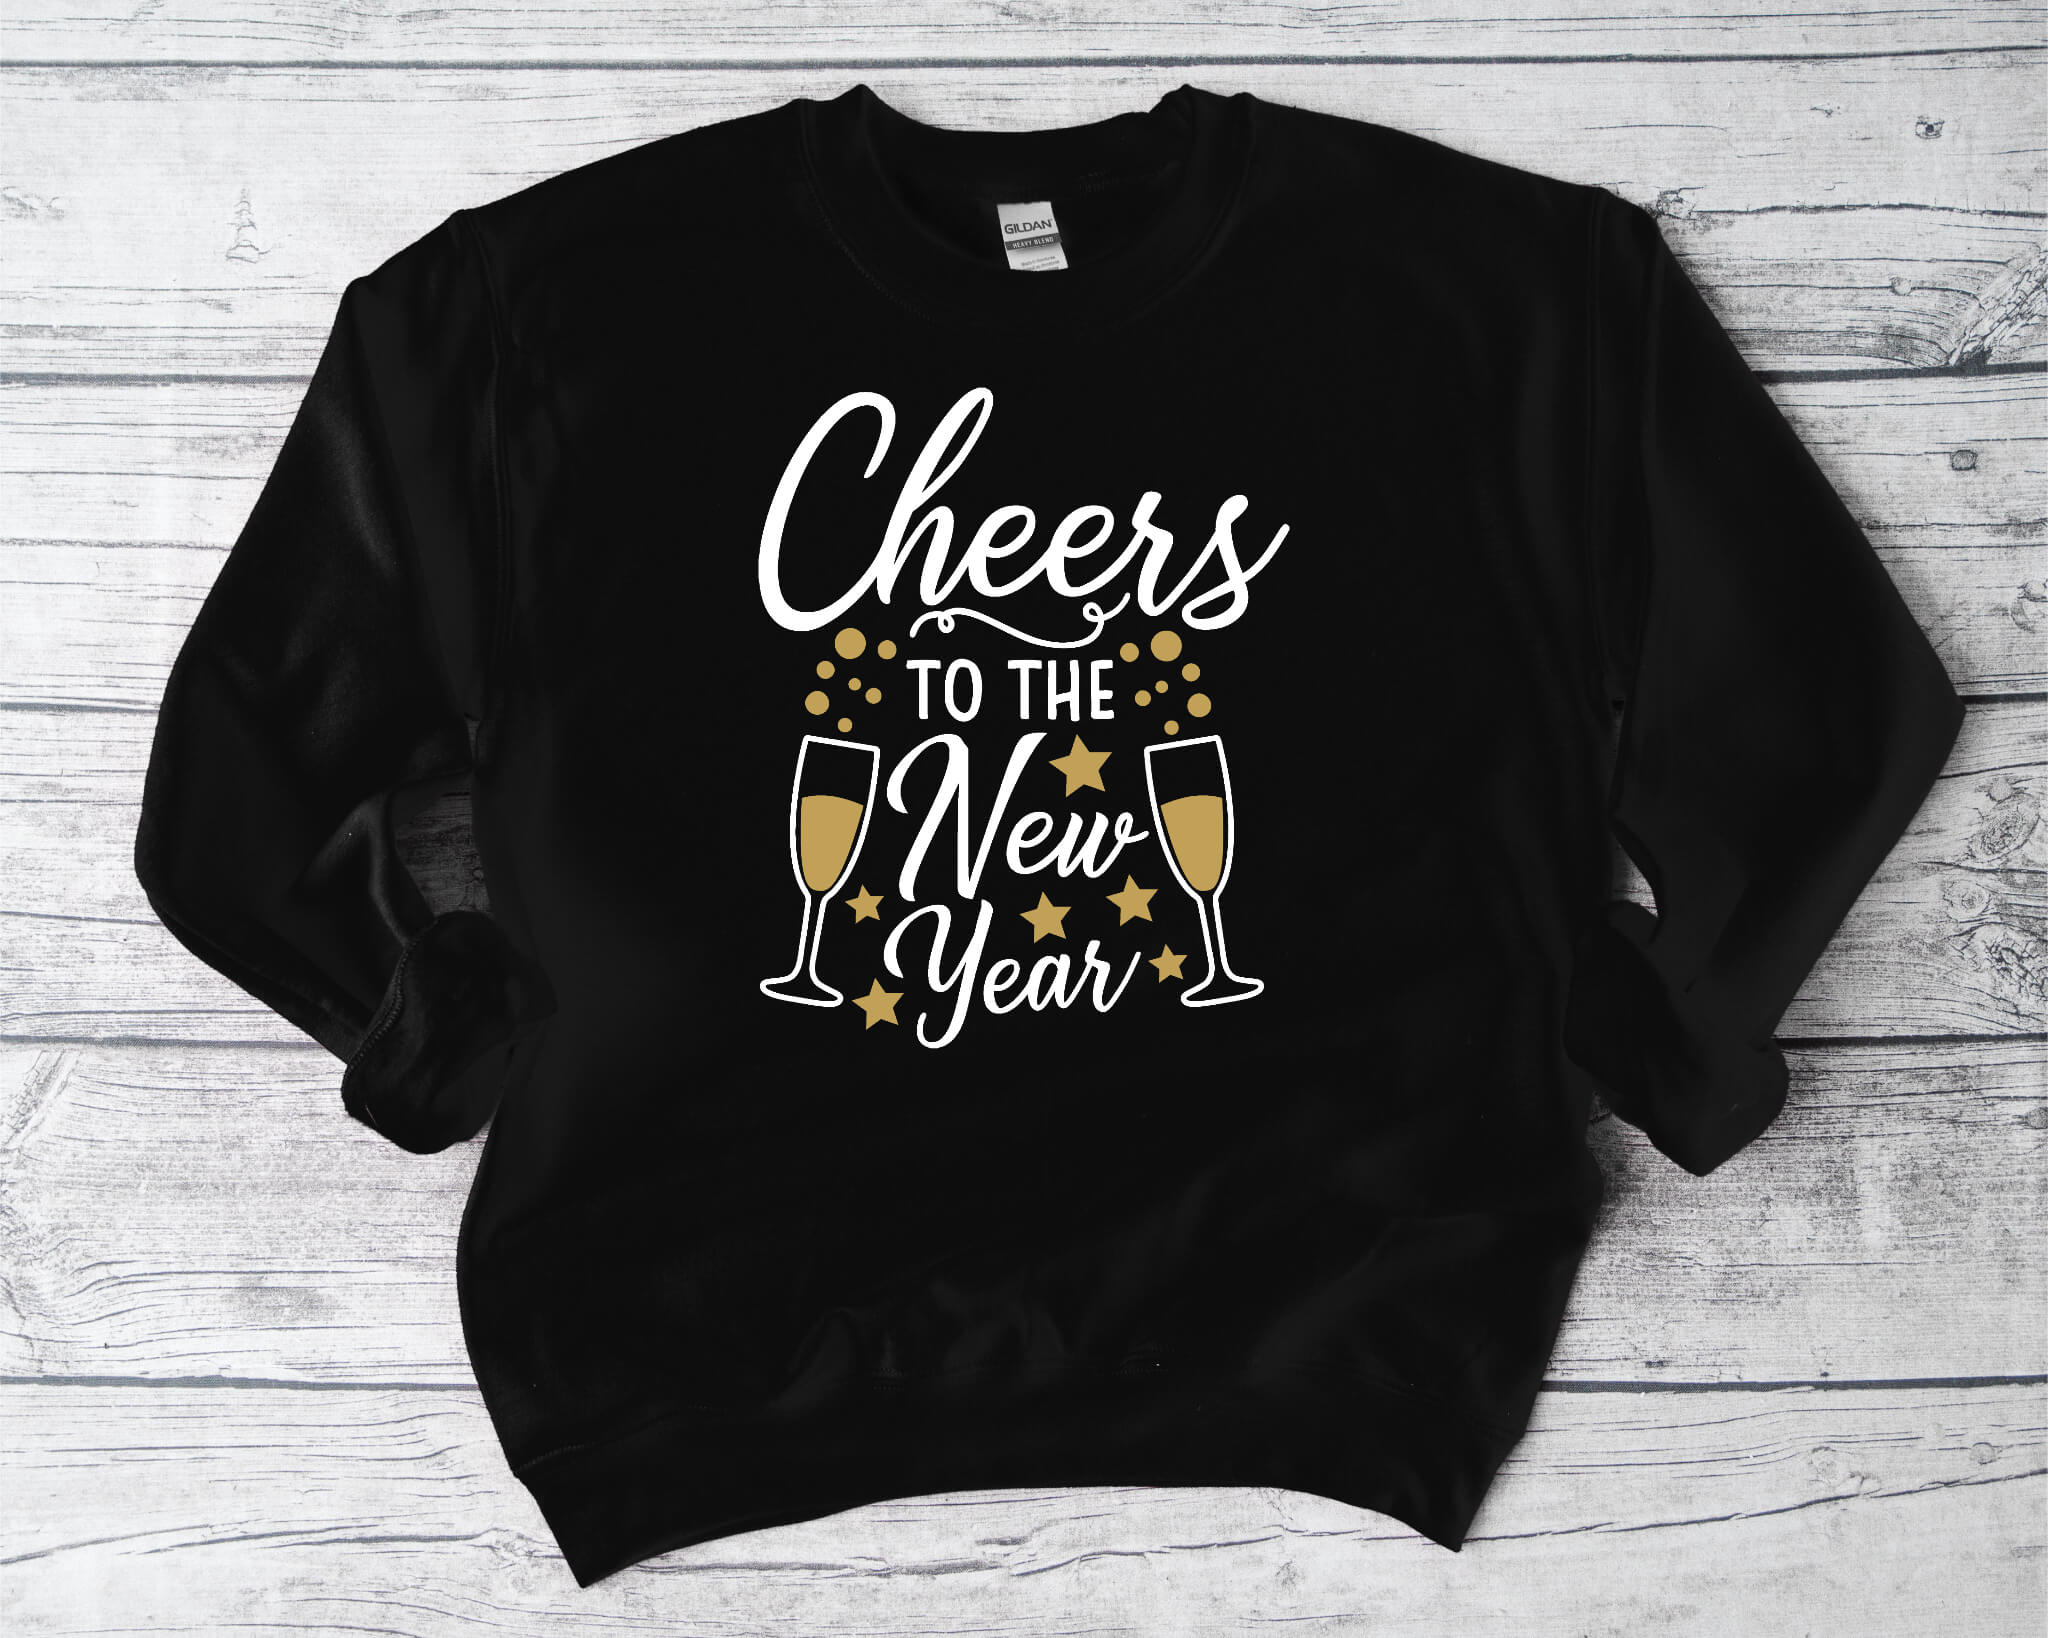 New Year's Cheers to the New Year Men's Women's Unisex Graphic Print T-Shirt